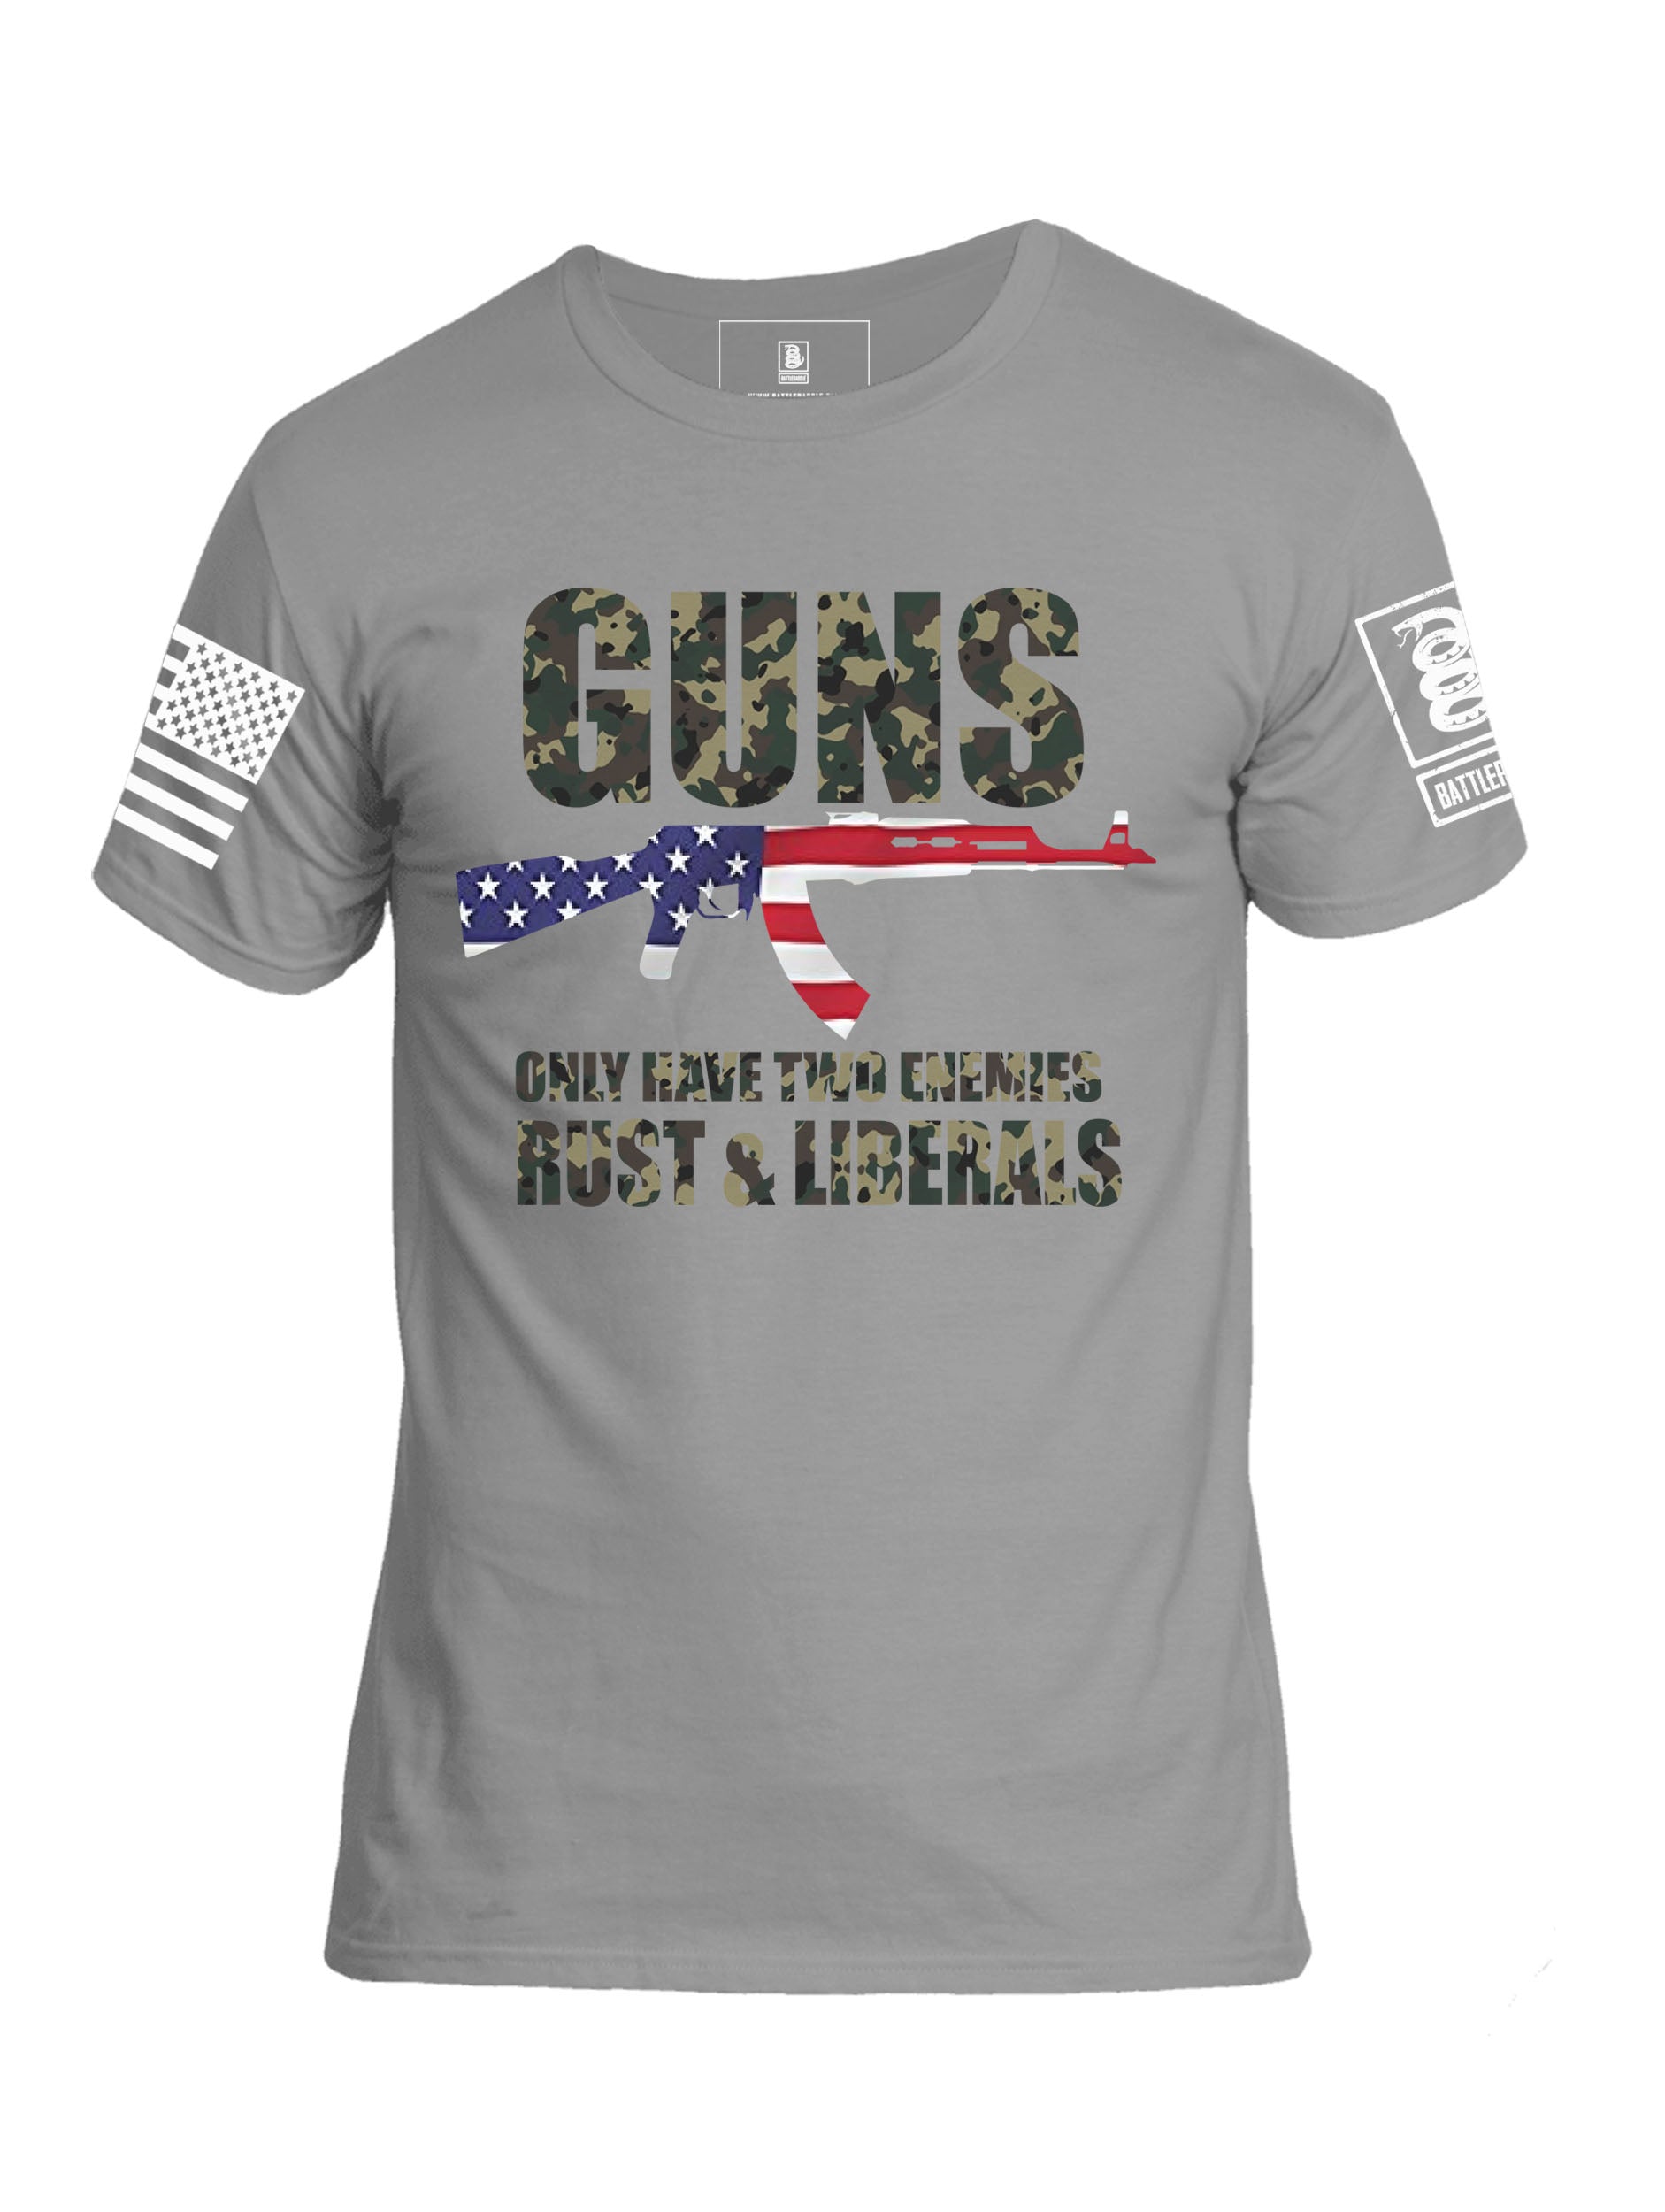 Battleraddle Guns Only Have Two Enemies Rust & Liberals Mens Crew Neck Cotton T Shirt